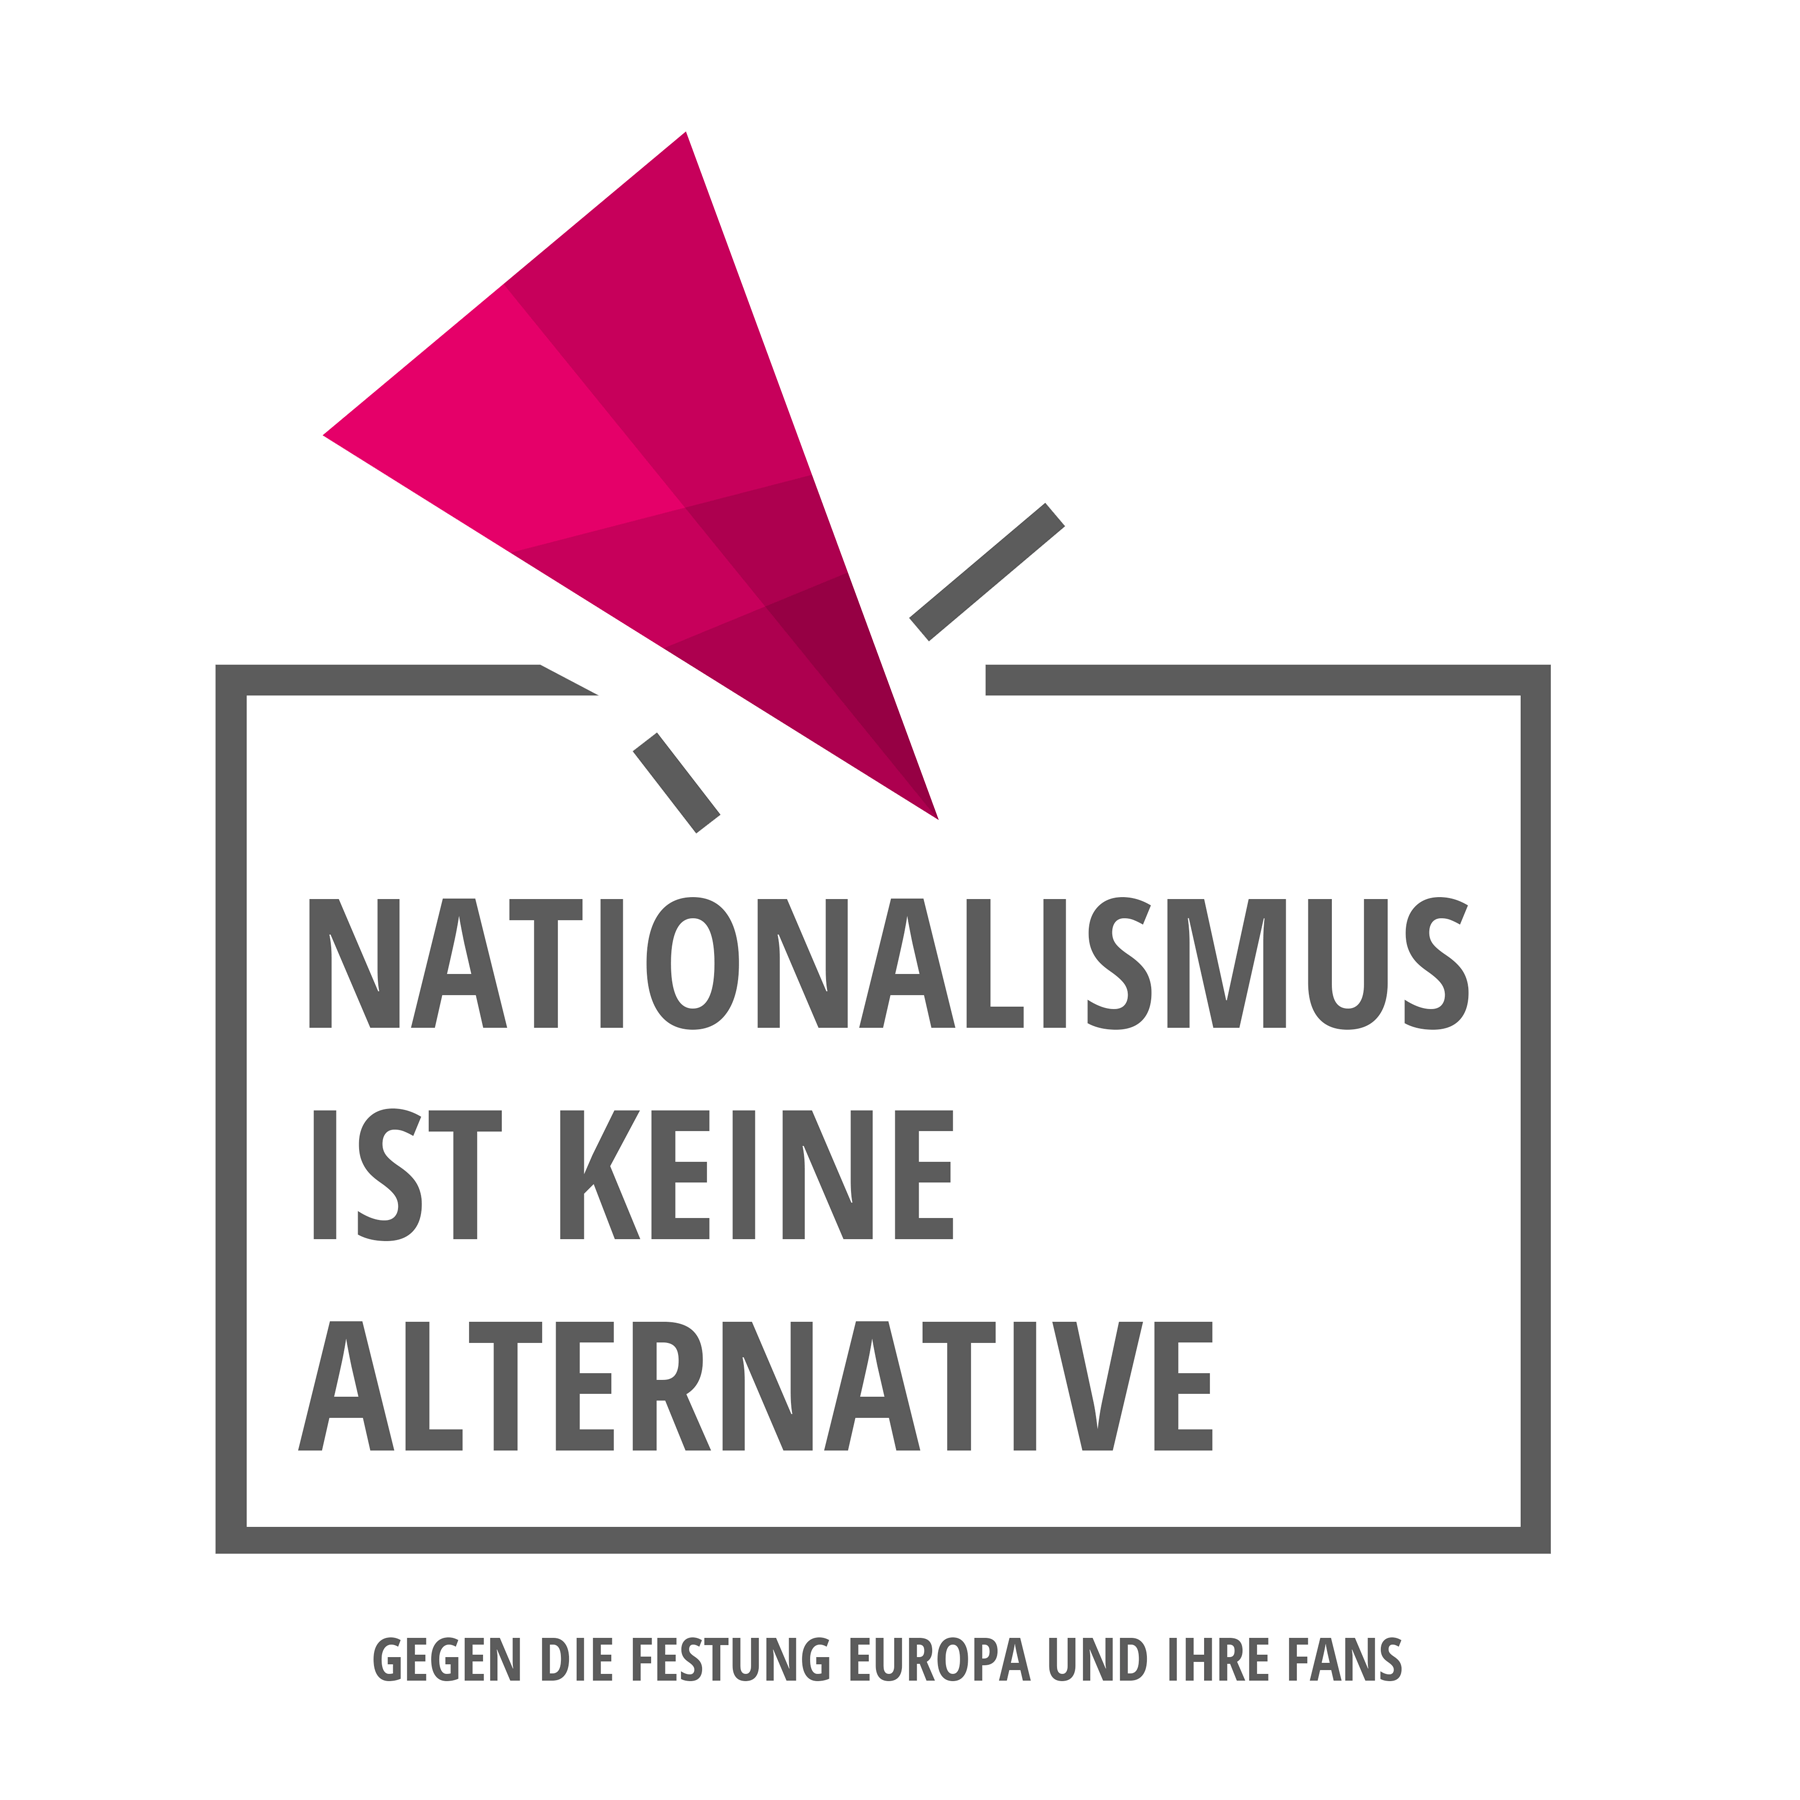 (c) Nationalismusistkeinealternative.net